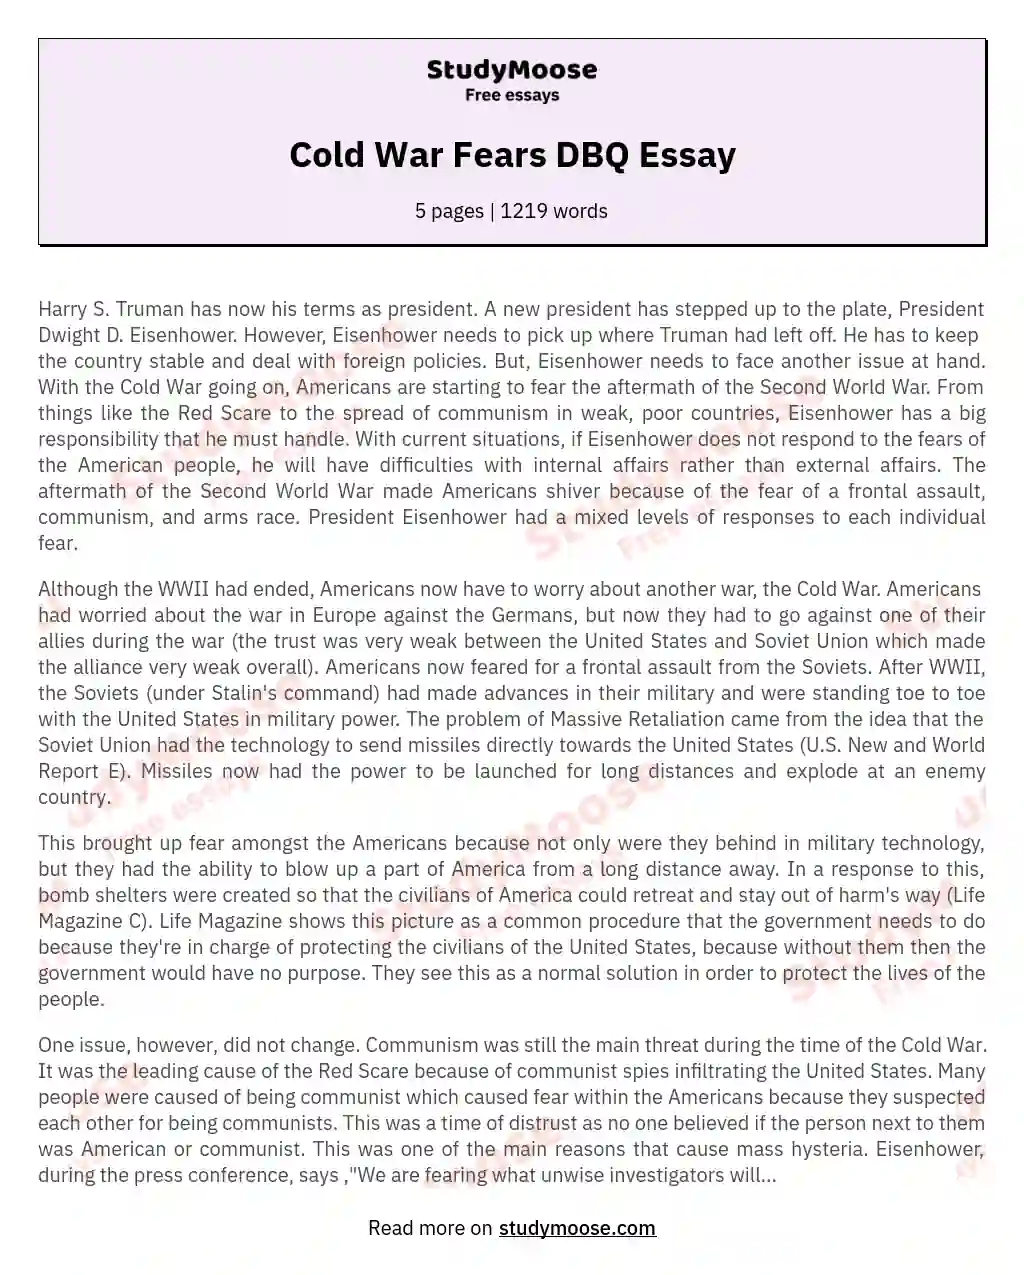 the cold war essay questions